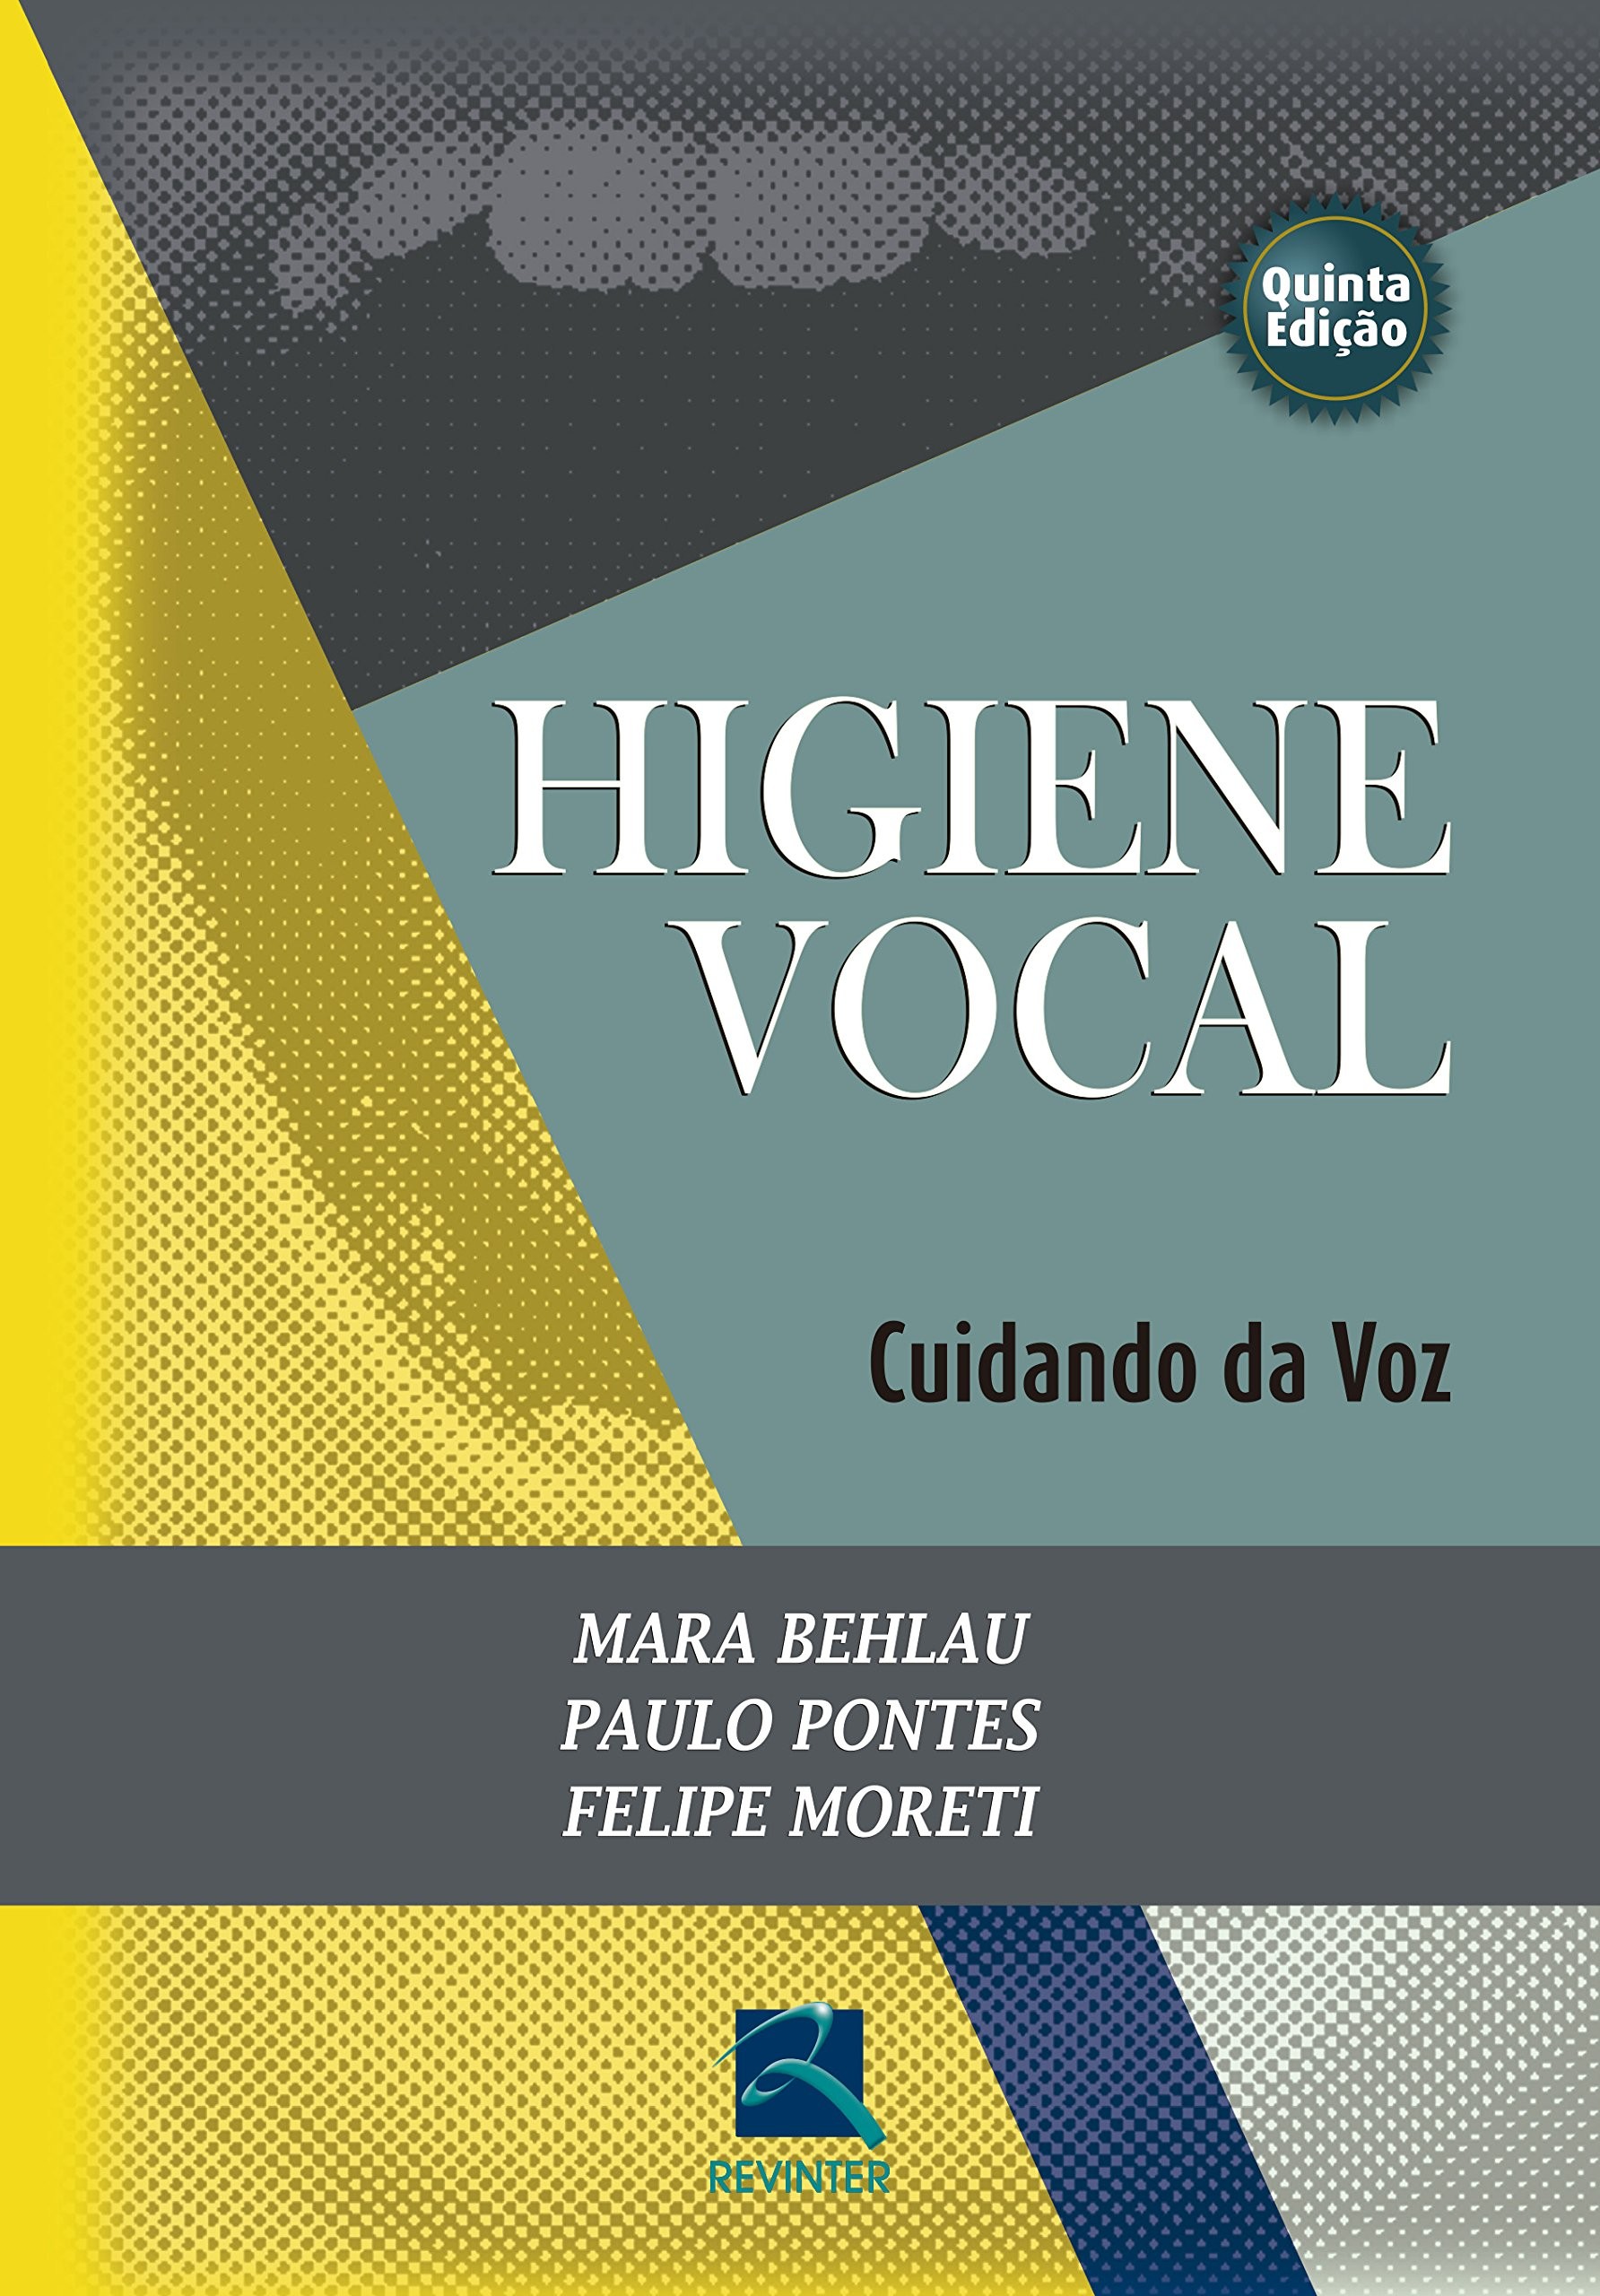 Higiene Vocal: Cuidando da Voz